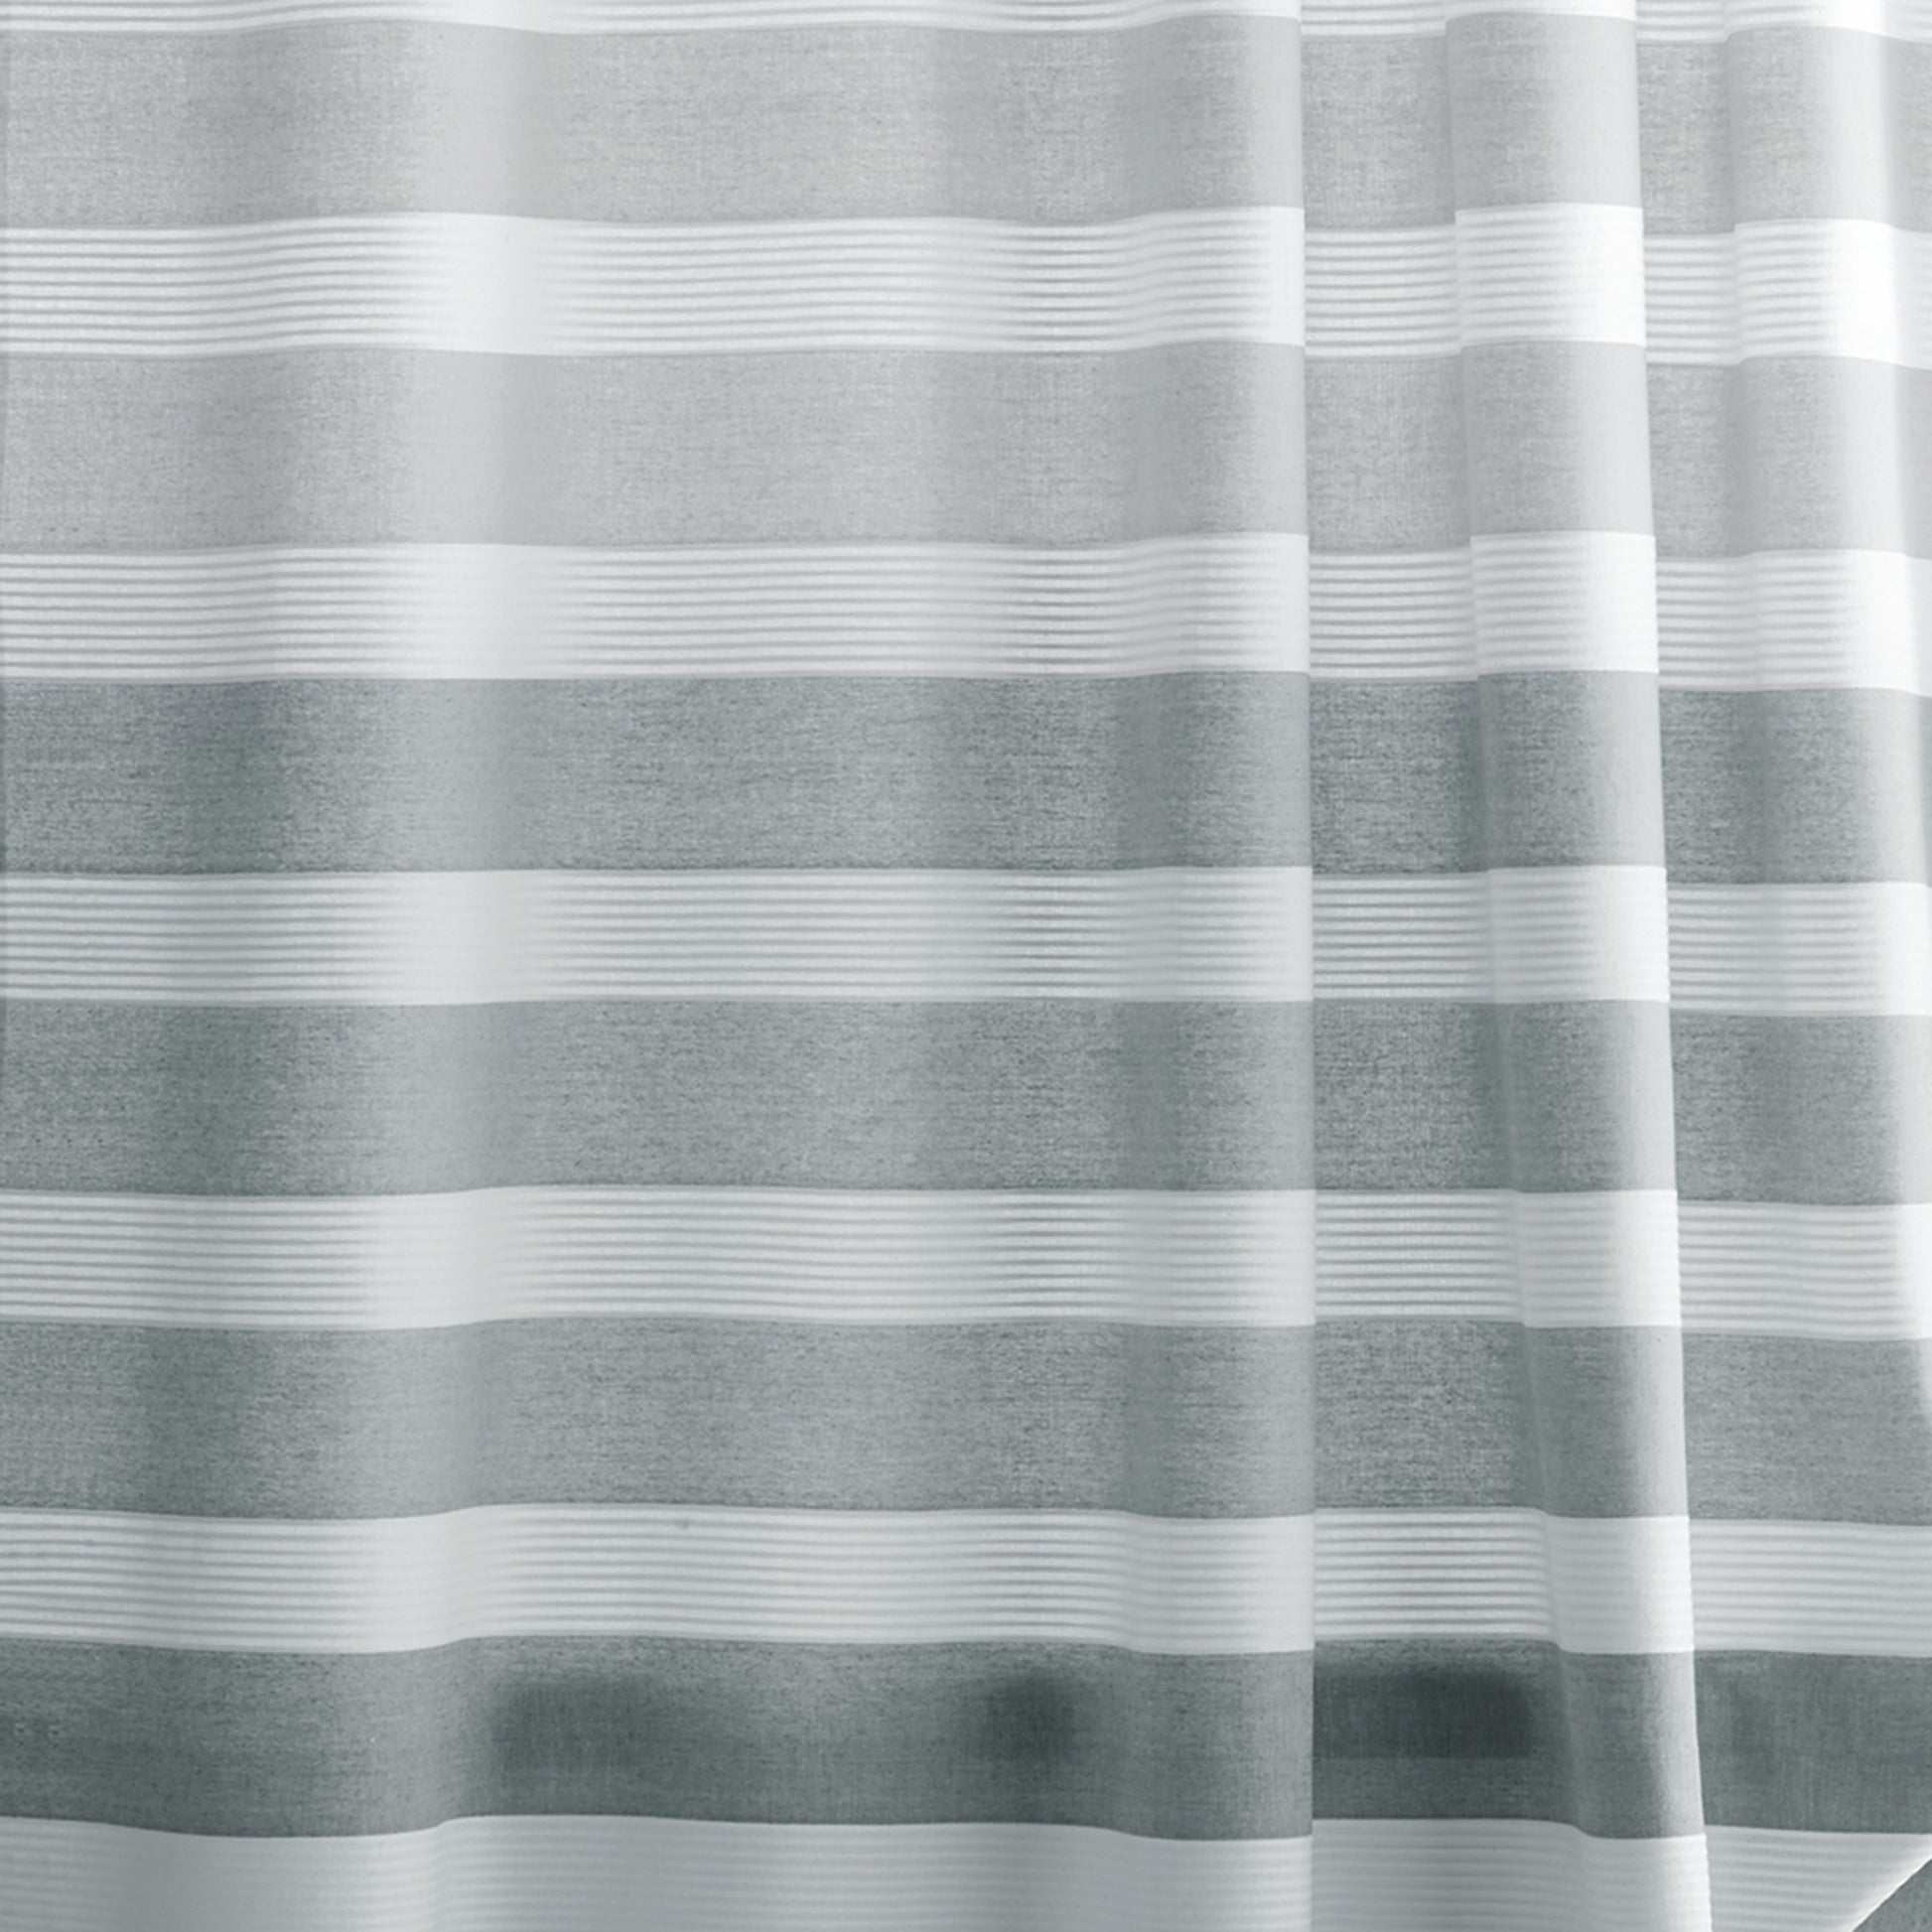 DKNY Highline Stripe Shower Curtain